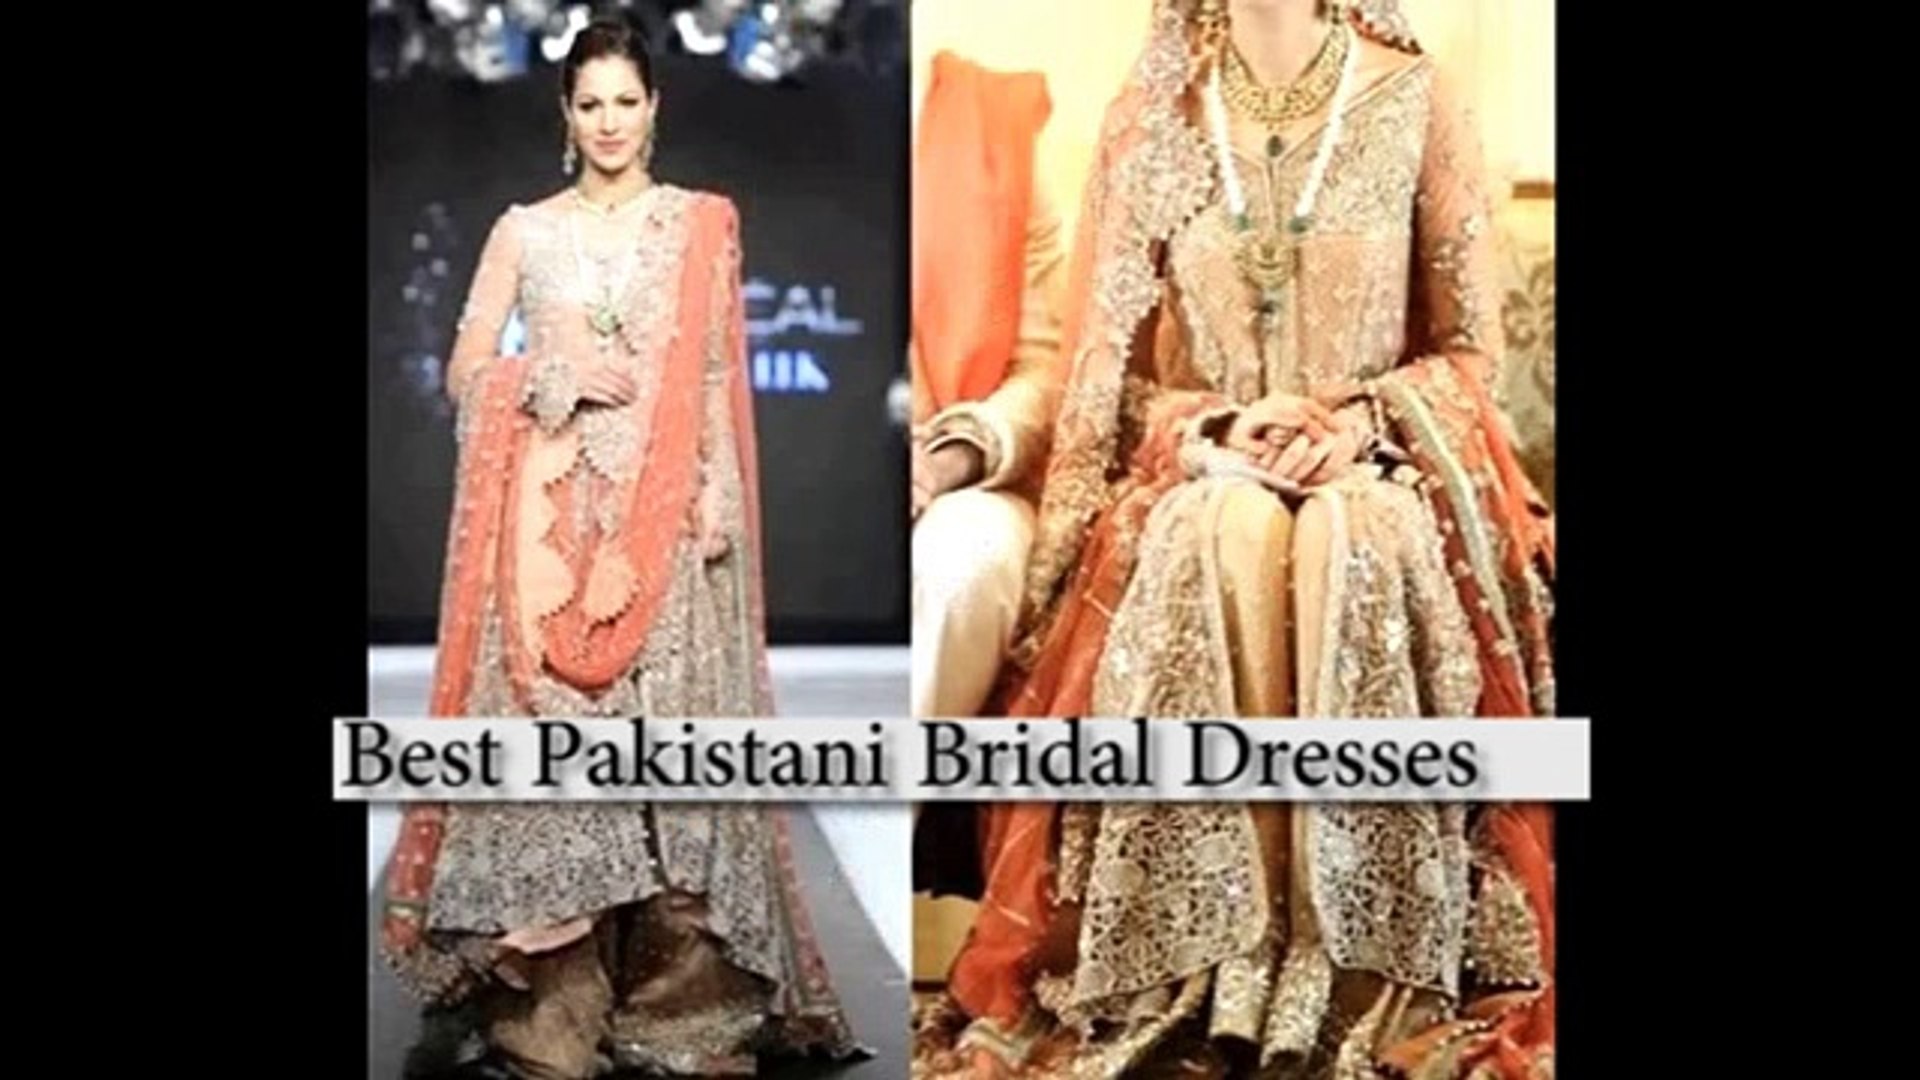 Pakistan Wedding Dresses 2016 Pakistani Bridal Dresses 2016 top songs 2016 best songs new songs upco